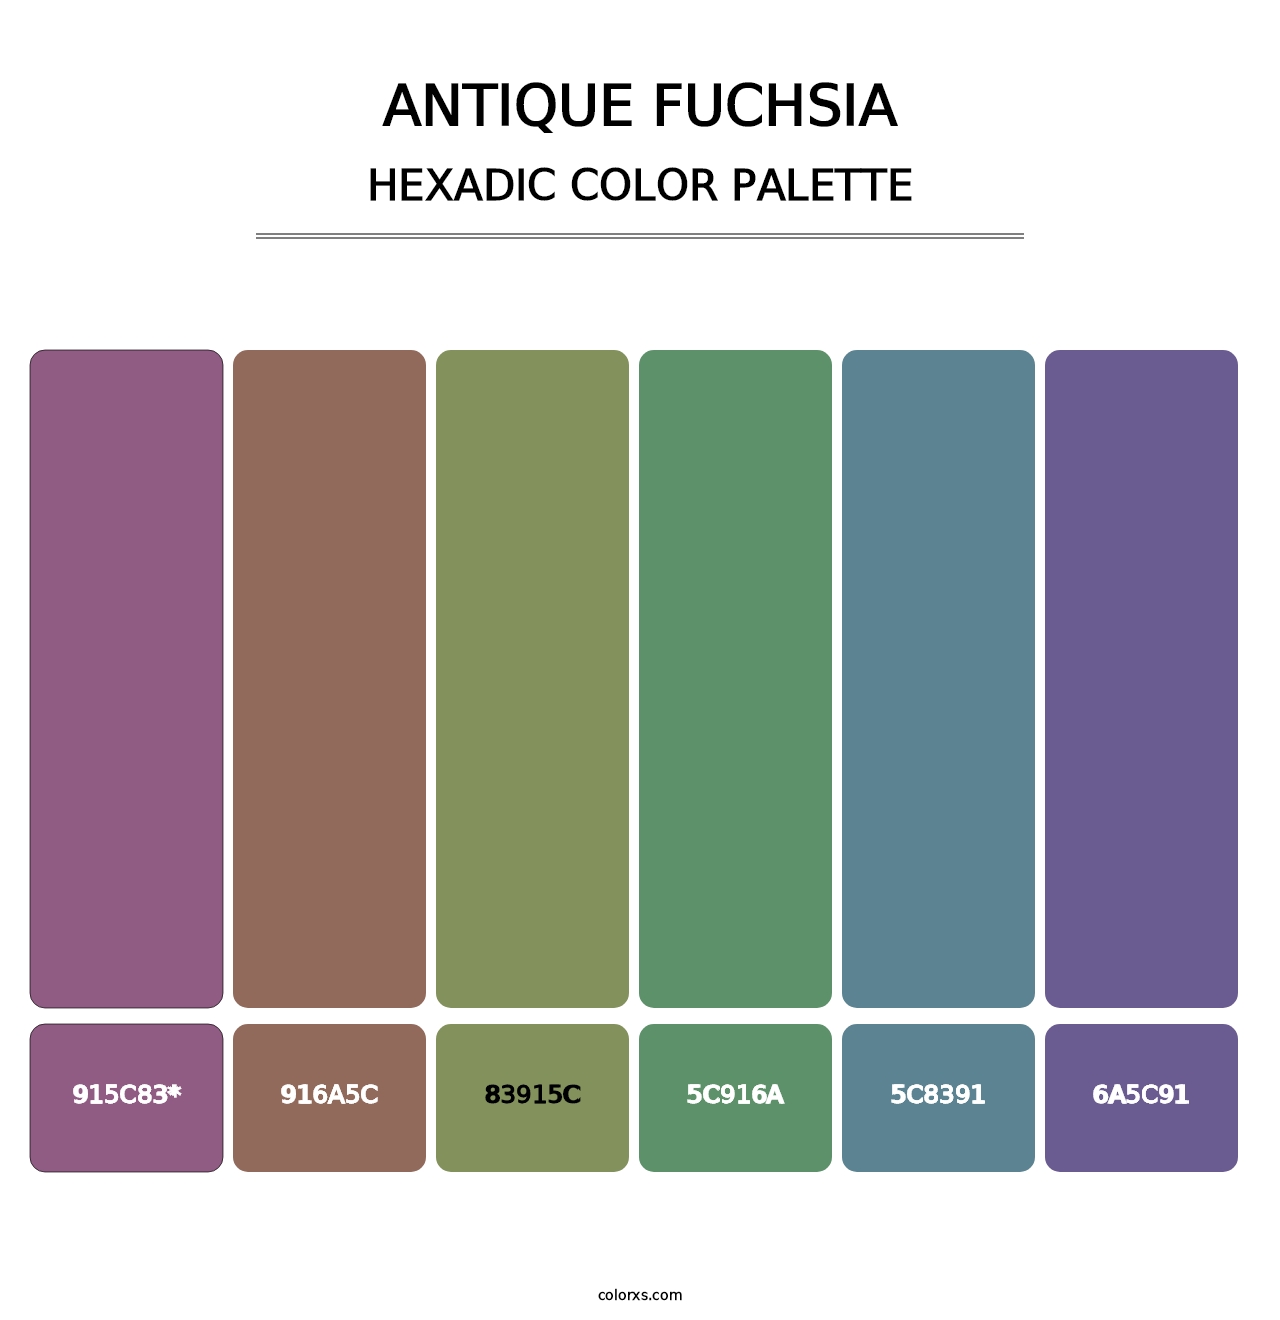 Antique Fuchsia - Hexadic Color Palette